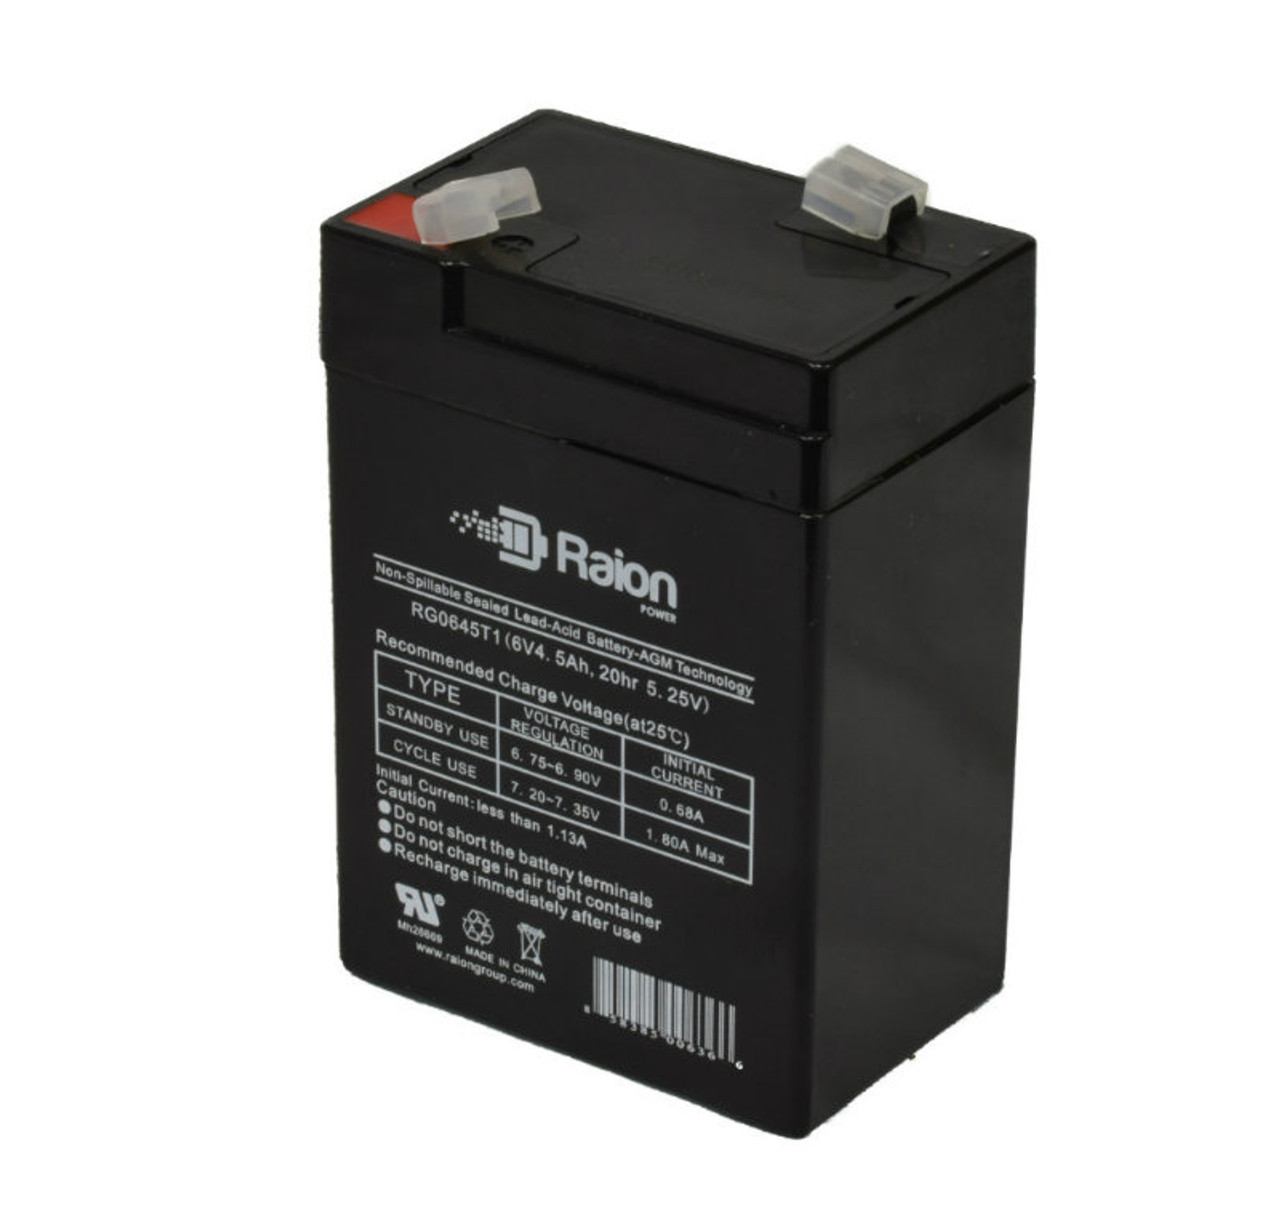 Raion Power RG0645T1 6V 4.5Ah Replacement Battery Cartridge for Emergi-Lite JSM91